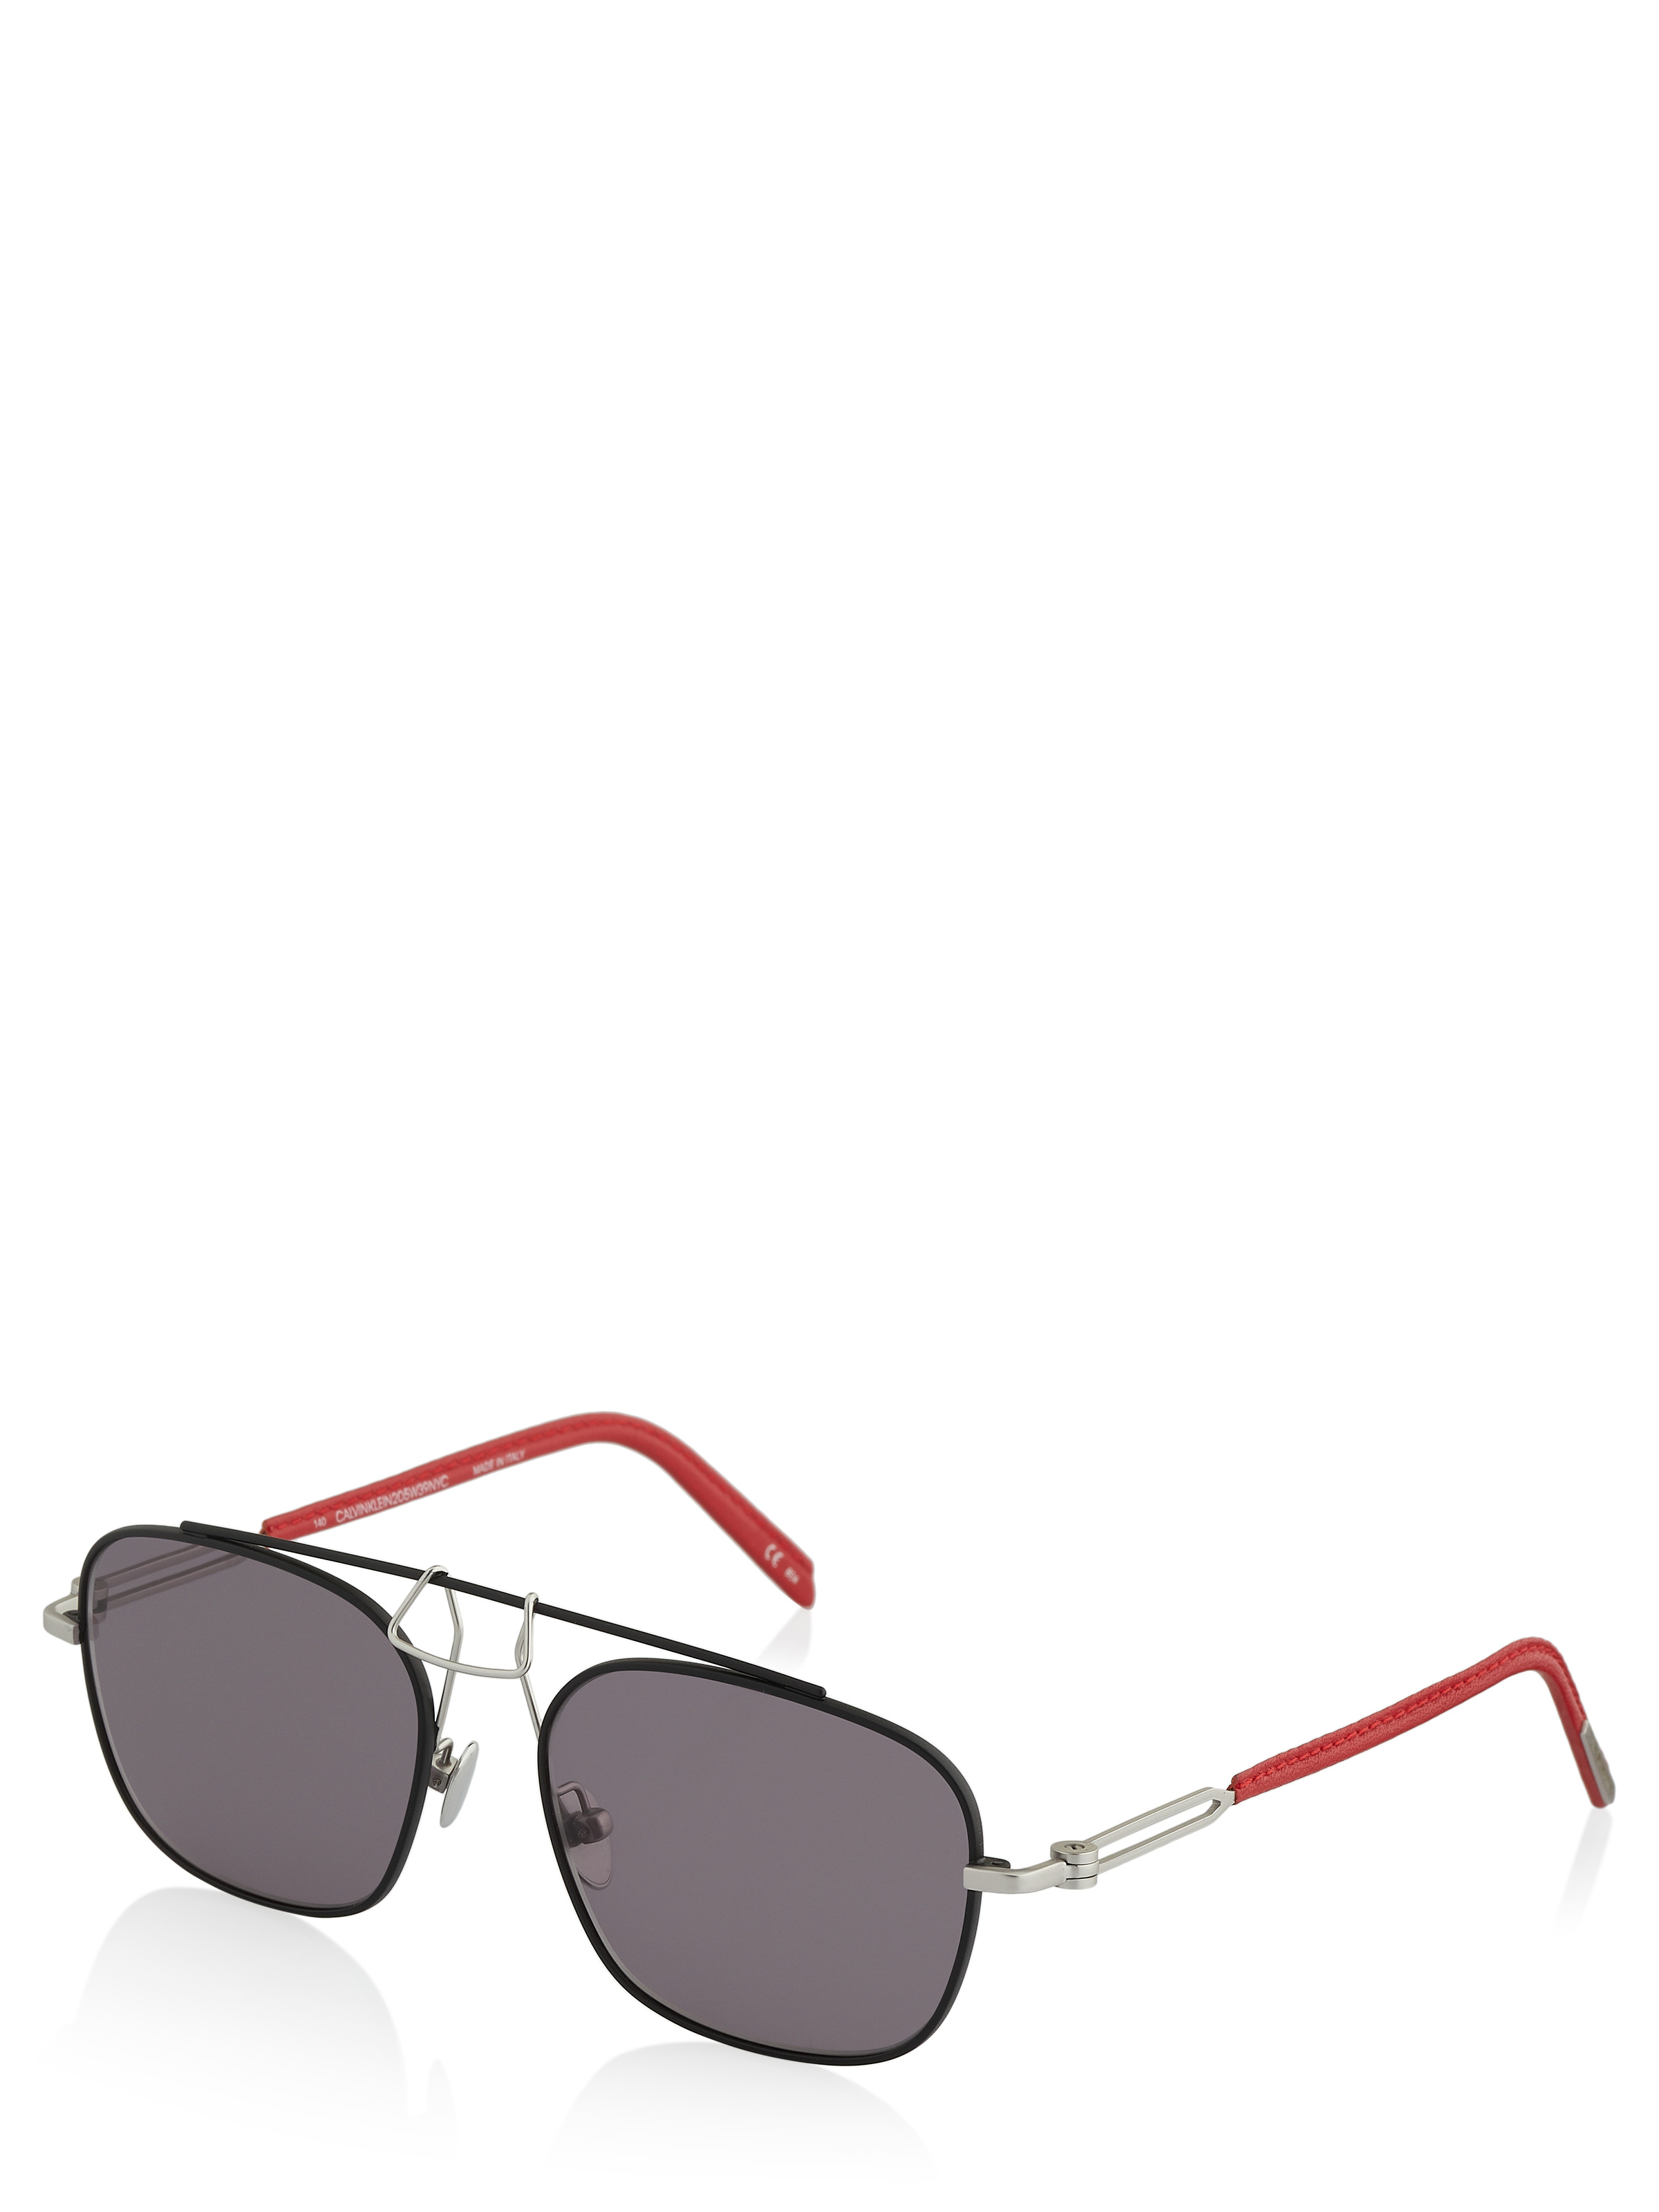 Calvin Klein 205W39NYC Sunglasses Black on SALE | Fashionesta